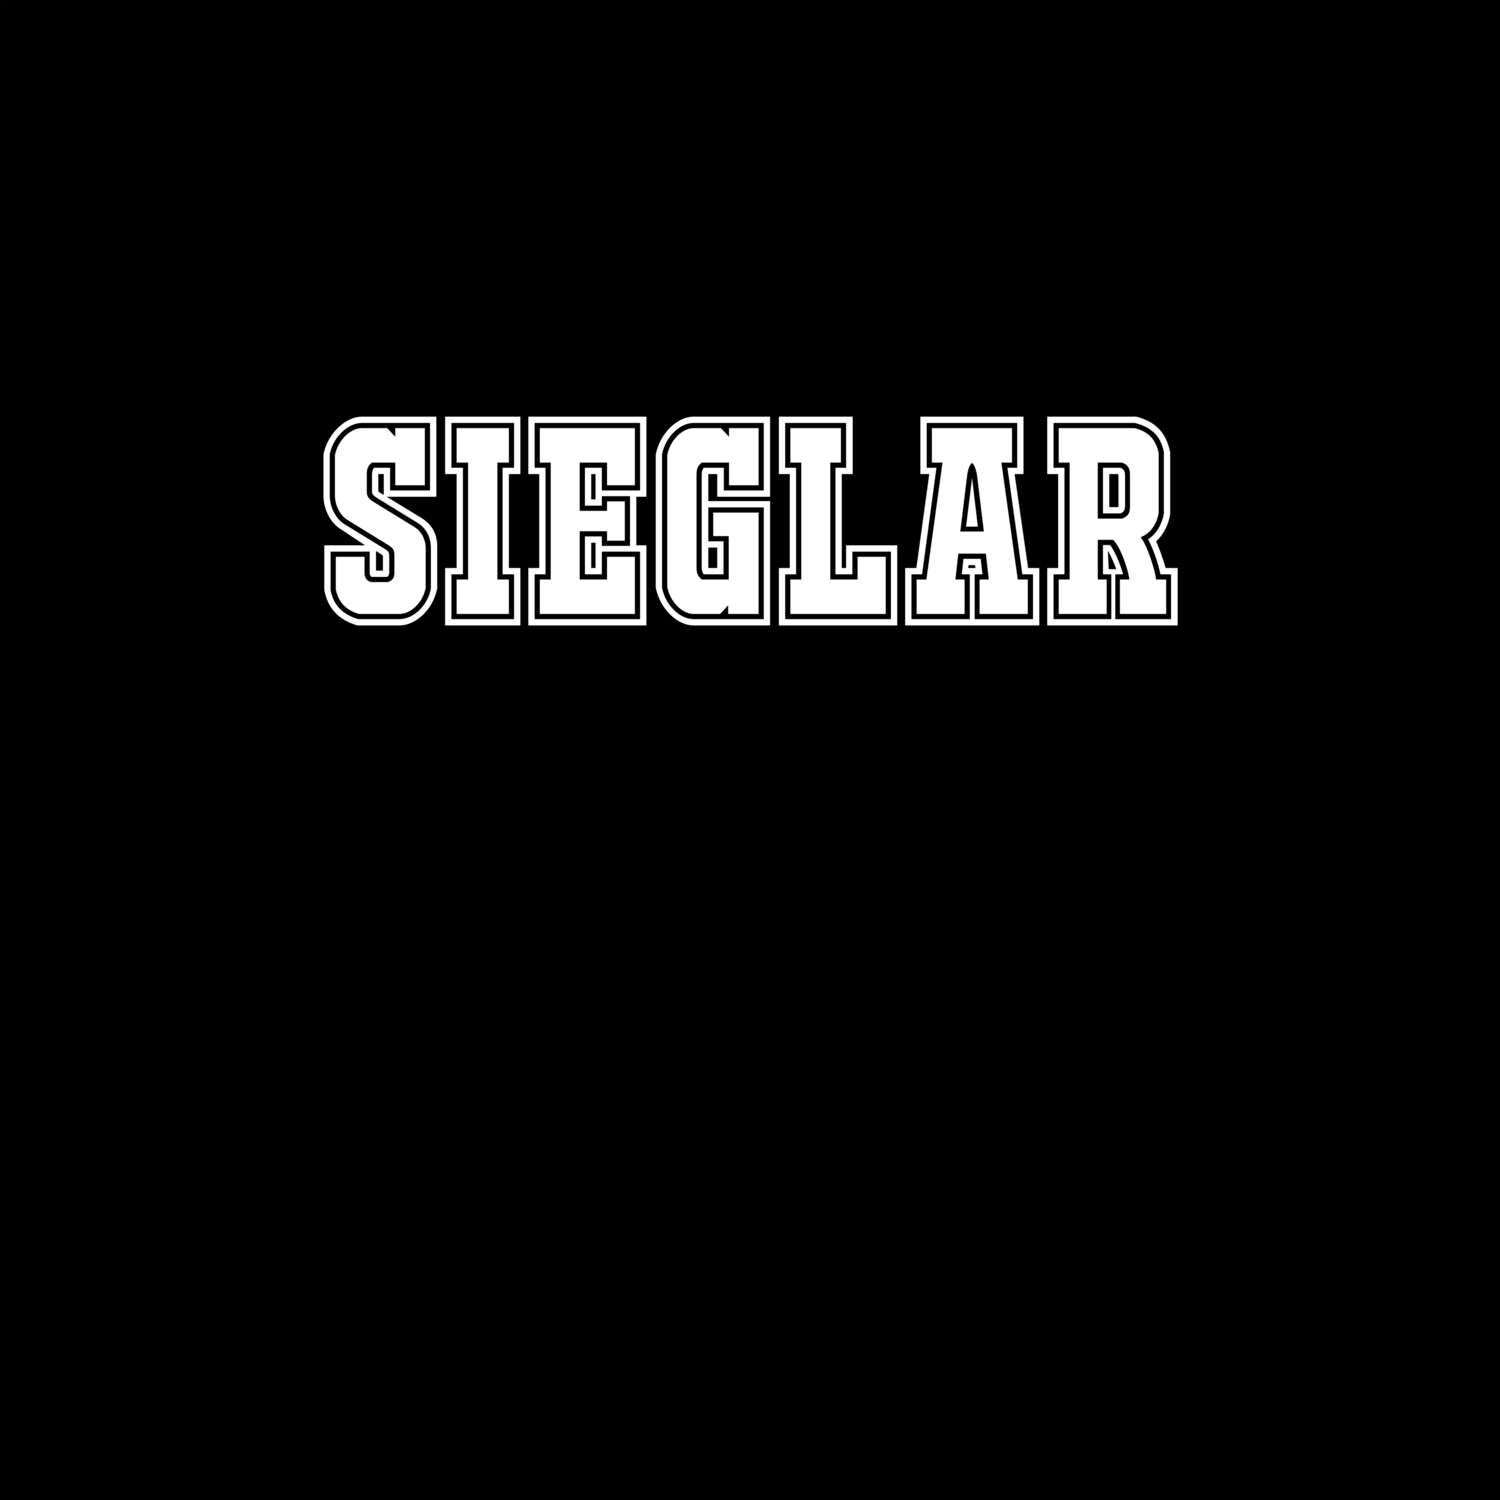 Sieglar T-Shirt »Classic«